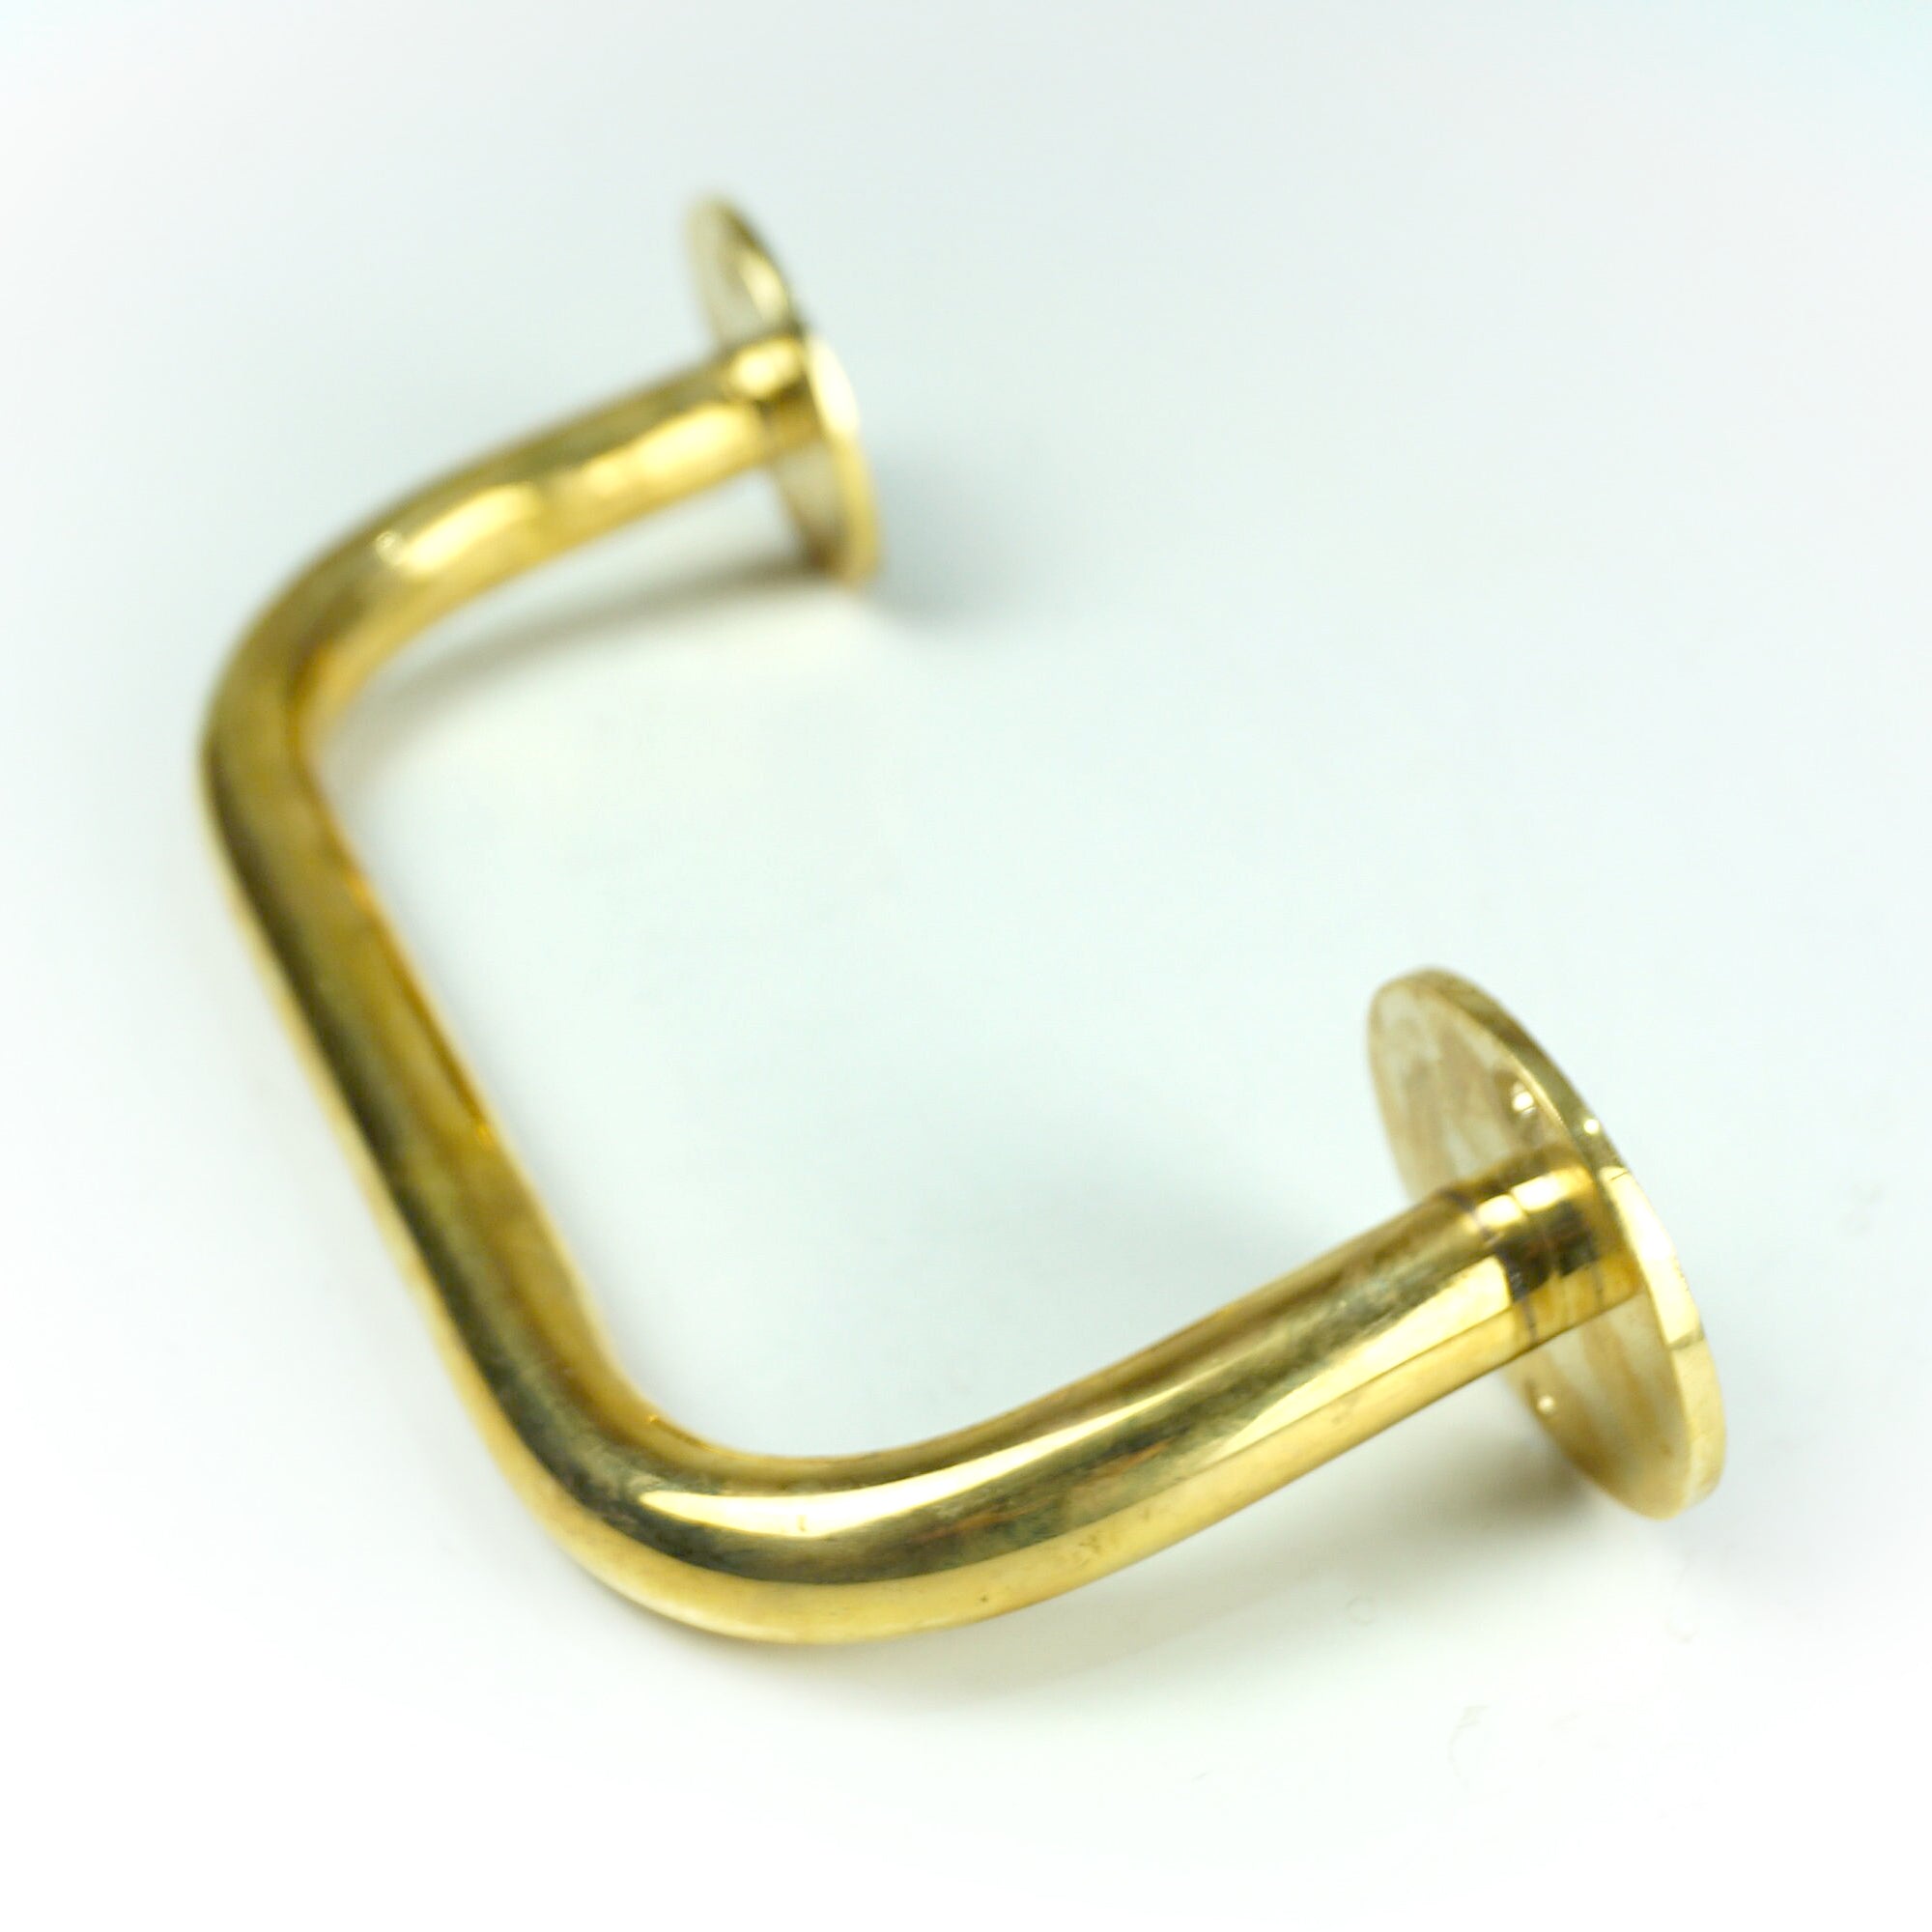 Handcrafted Brass Towel holder